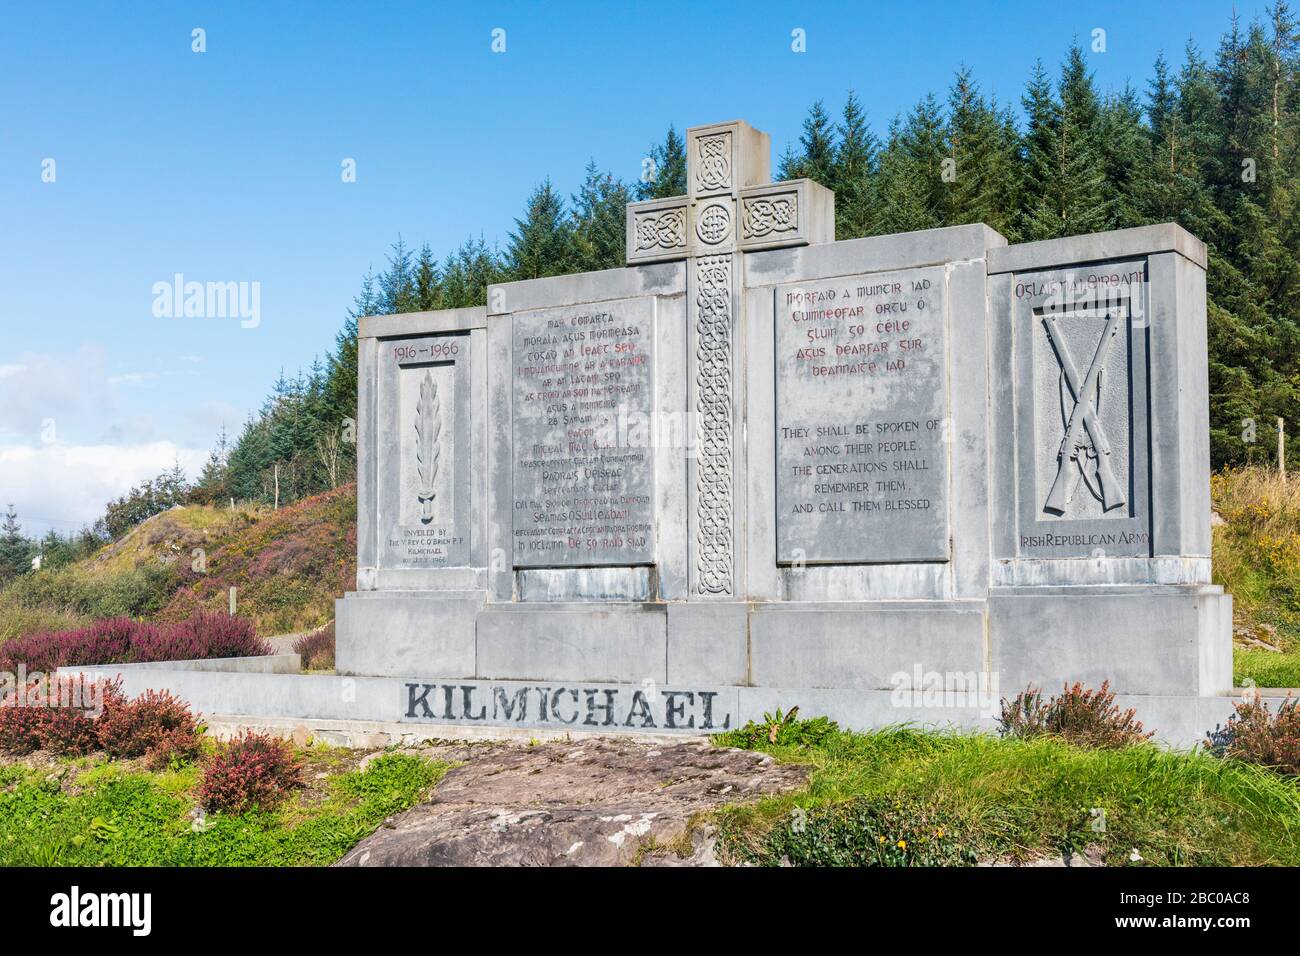 Memorial at the site of the Kilmichael Ambush, County Cork, Ireland, where, during the Irish War of Indendence, on November 28, 1920, 36 Irish Republi Stock Photo